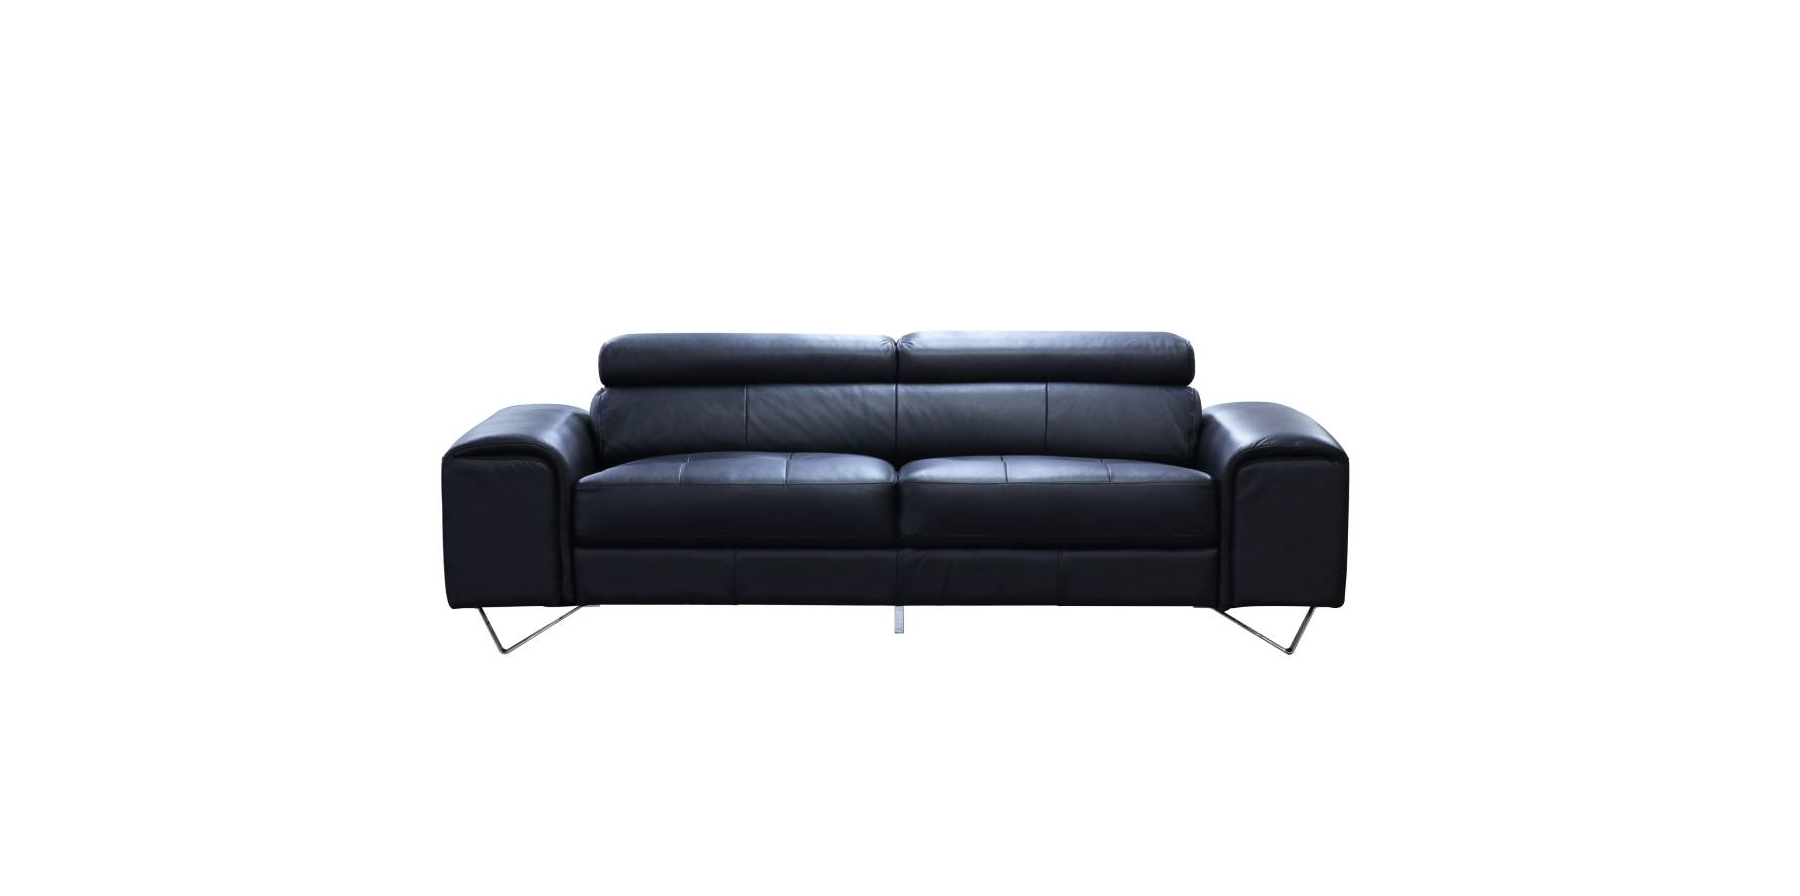 Bellagio Leather 3 Seater Sofa - Black